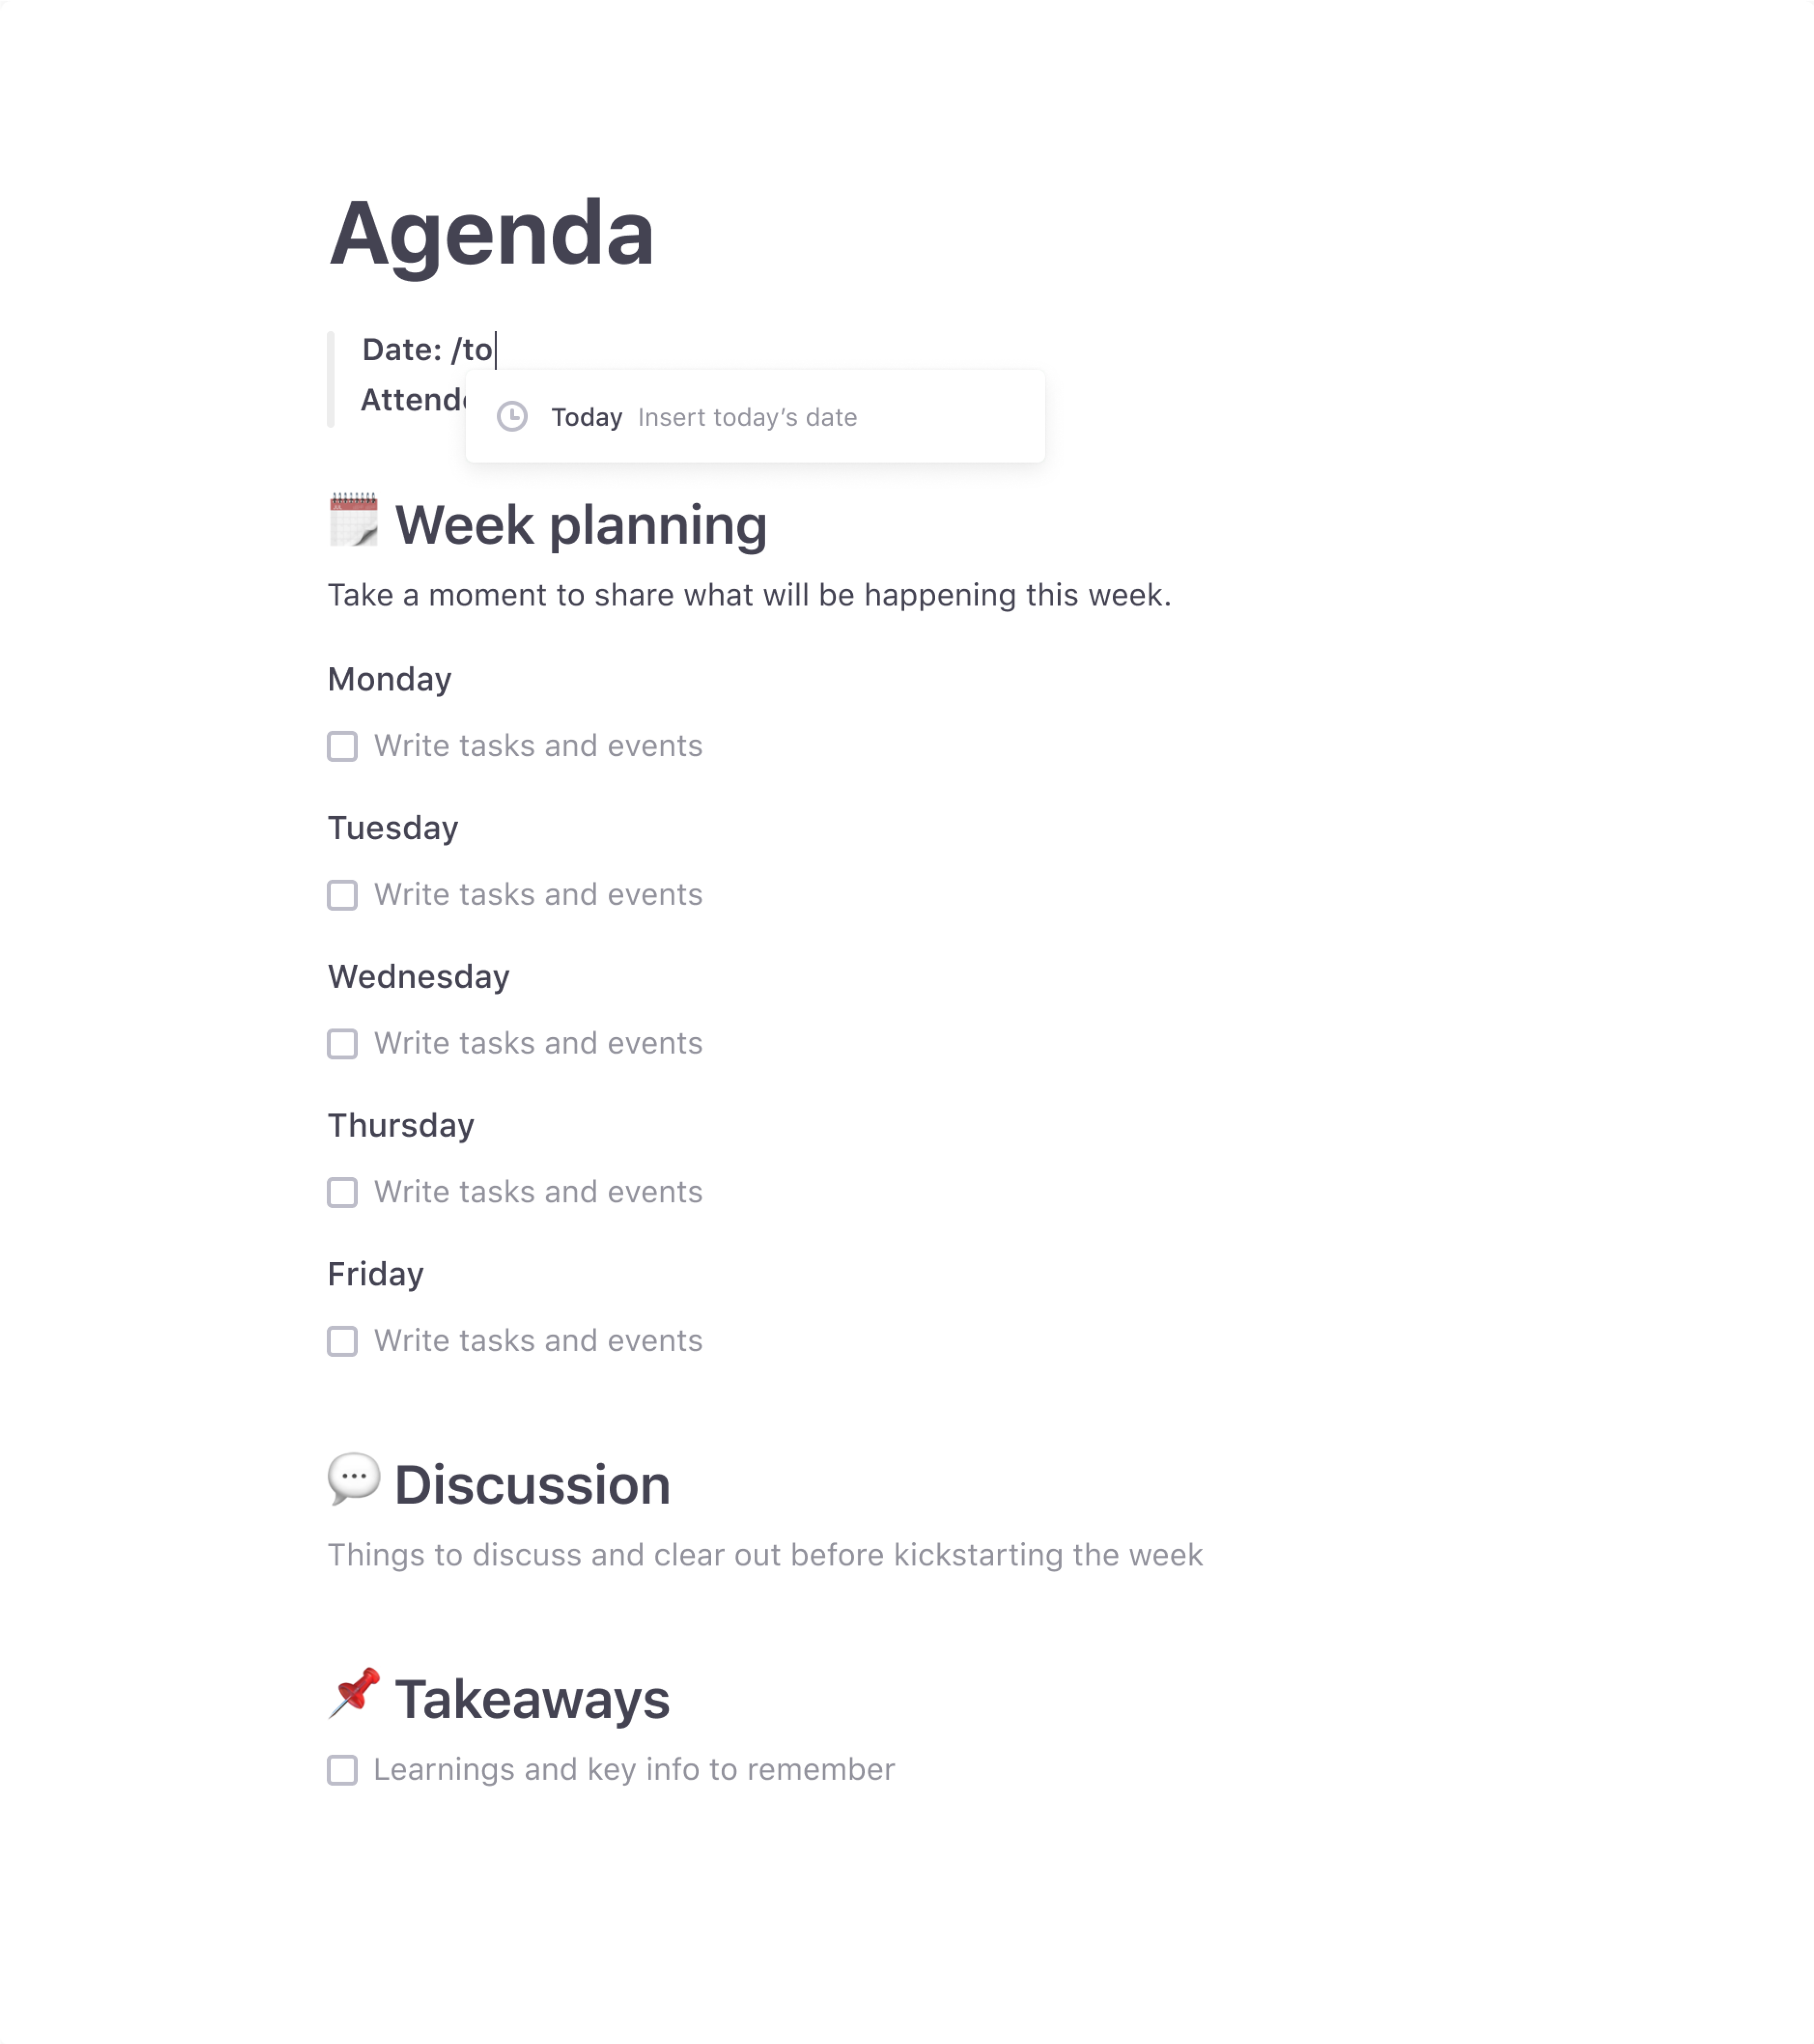 Simple Meeting Agenda Template